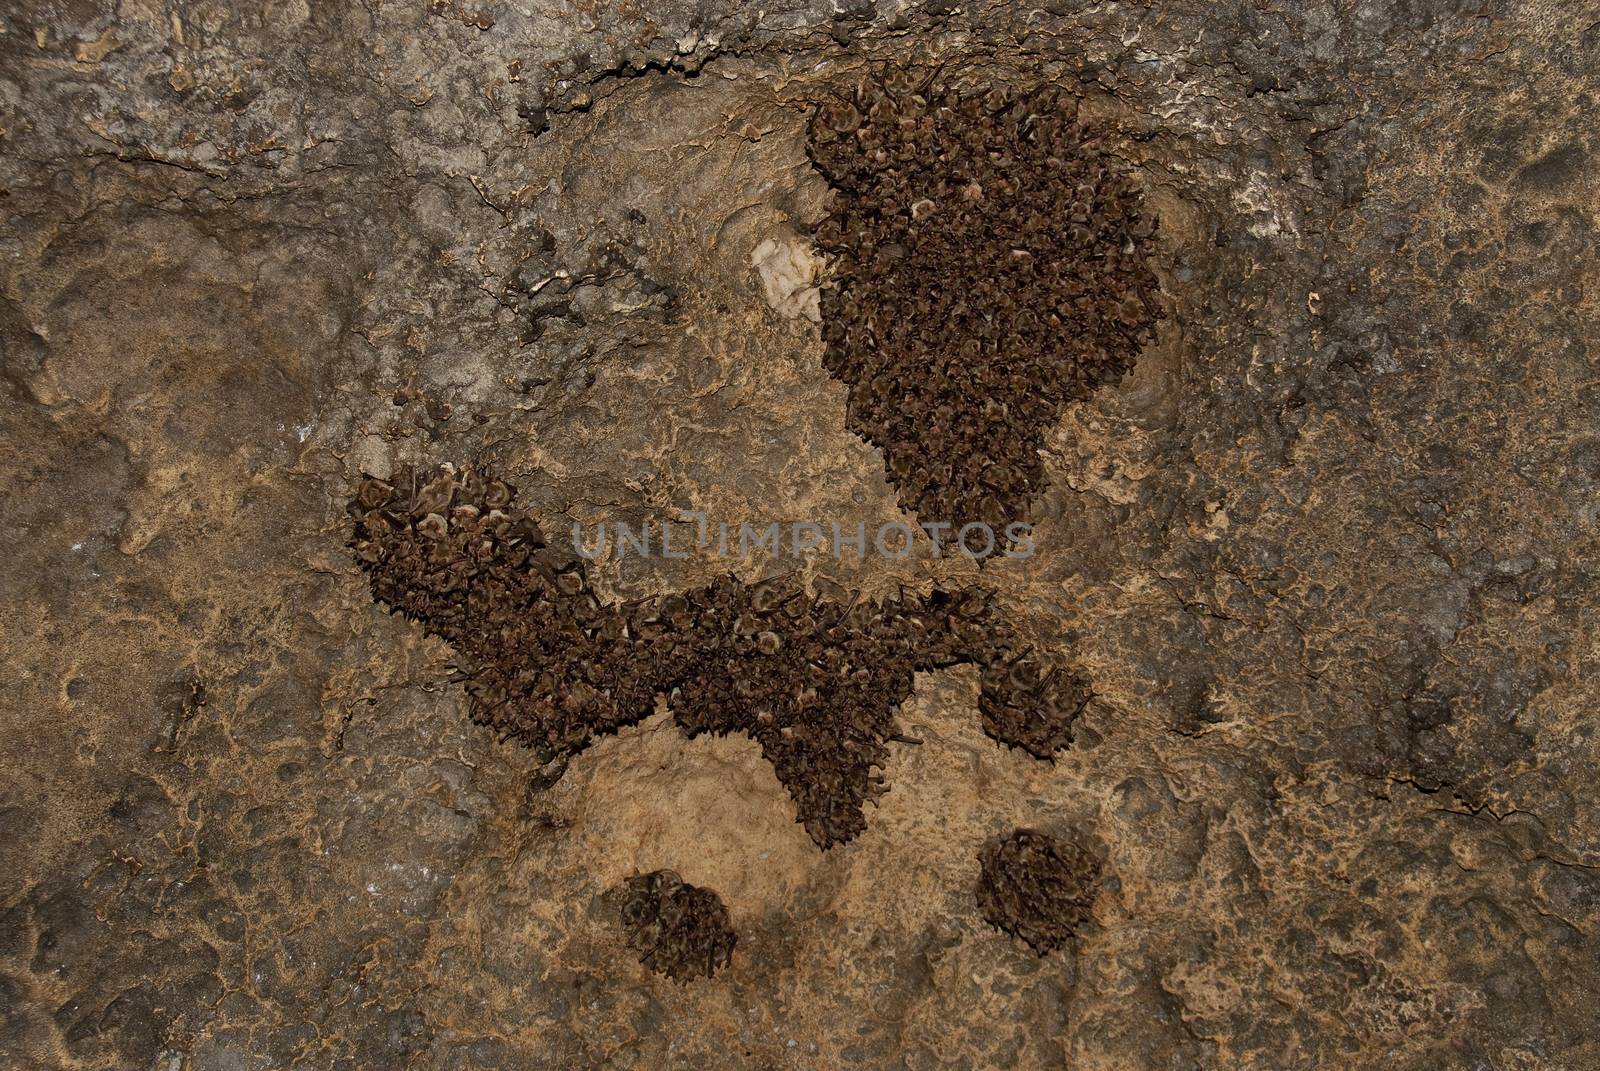 Groups of sleeping bats in cave, Myotis myotis by jalonsohu@gmail.com